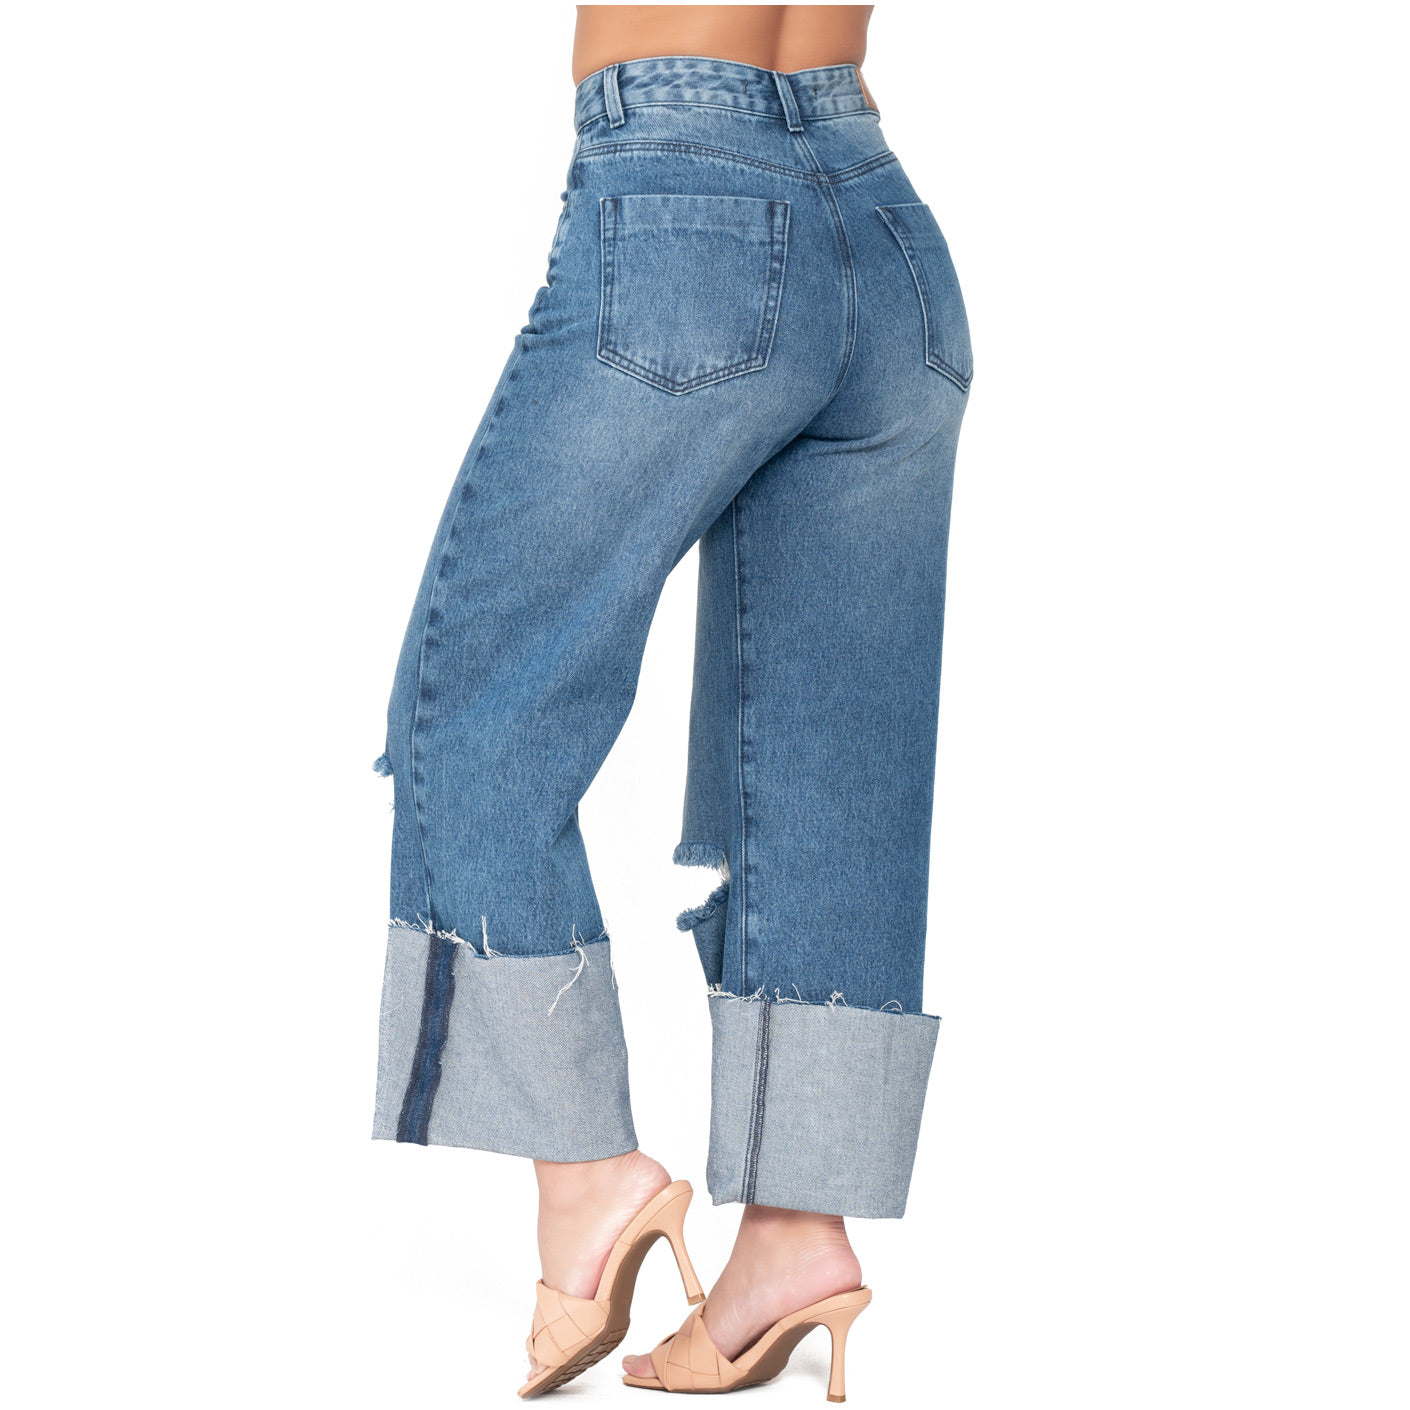 Lowla 212395 - High Waisted Distressed Denim Jeans Full Length